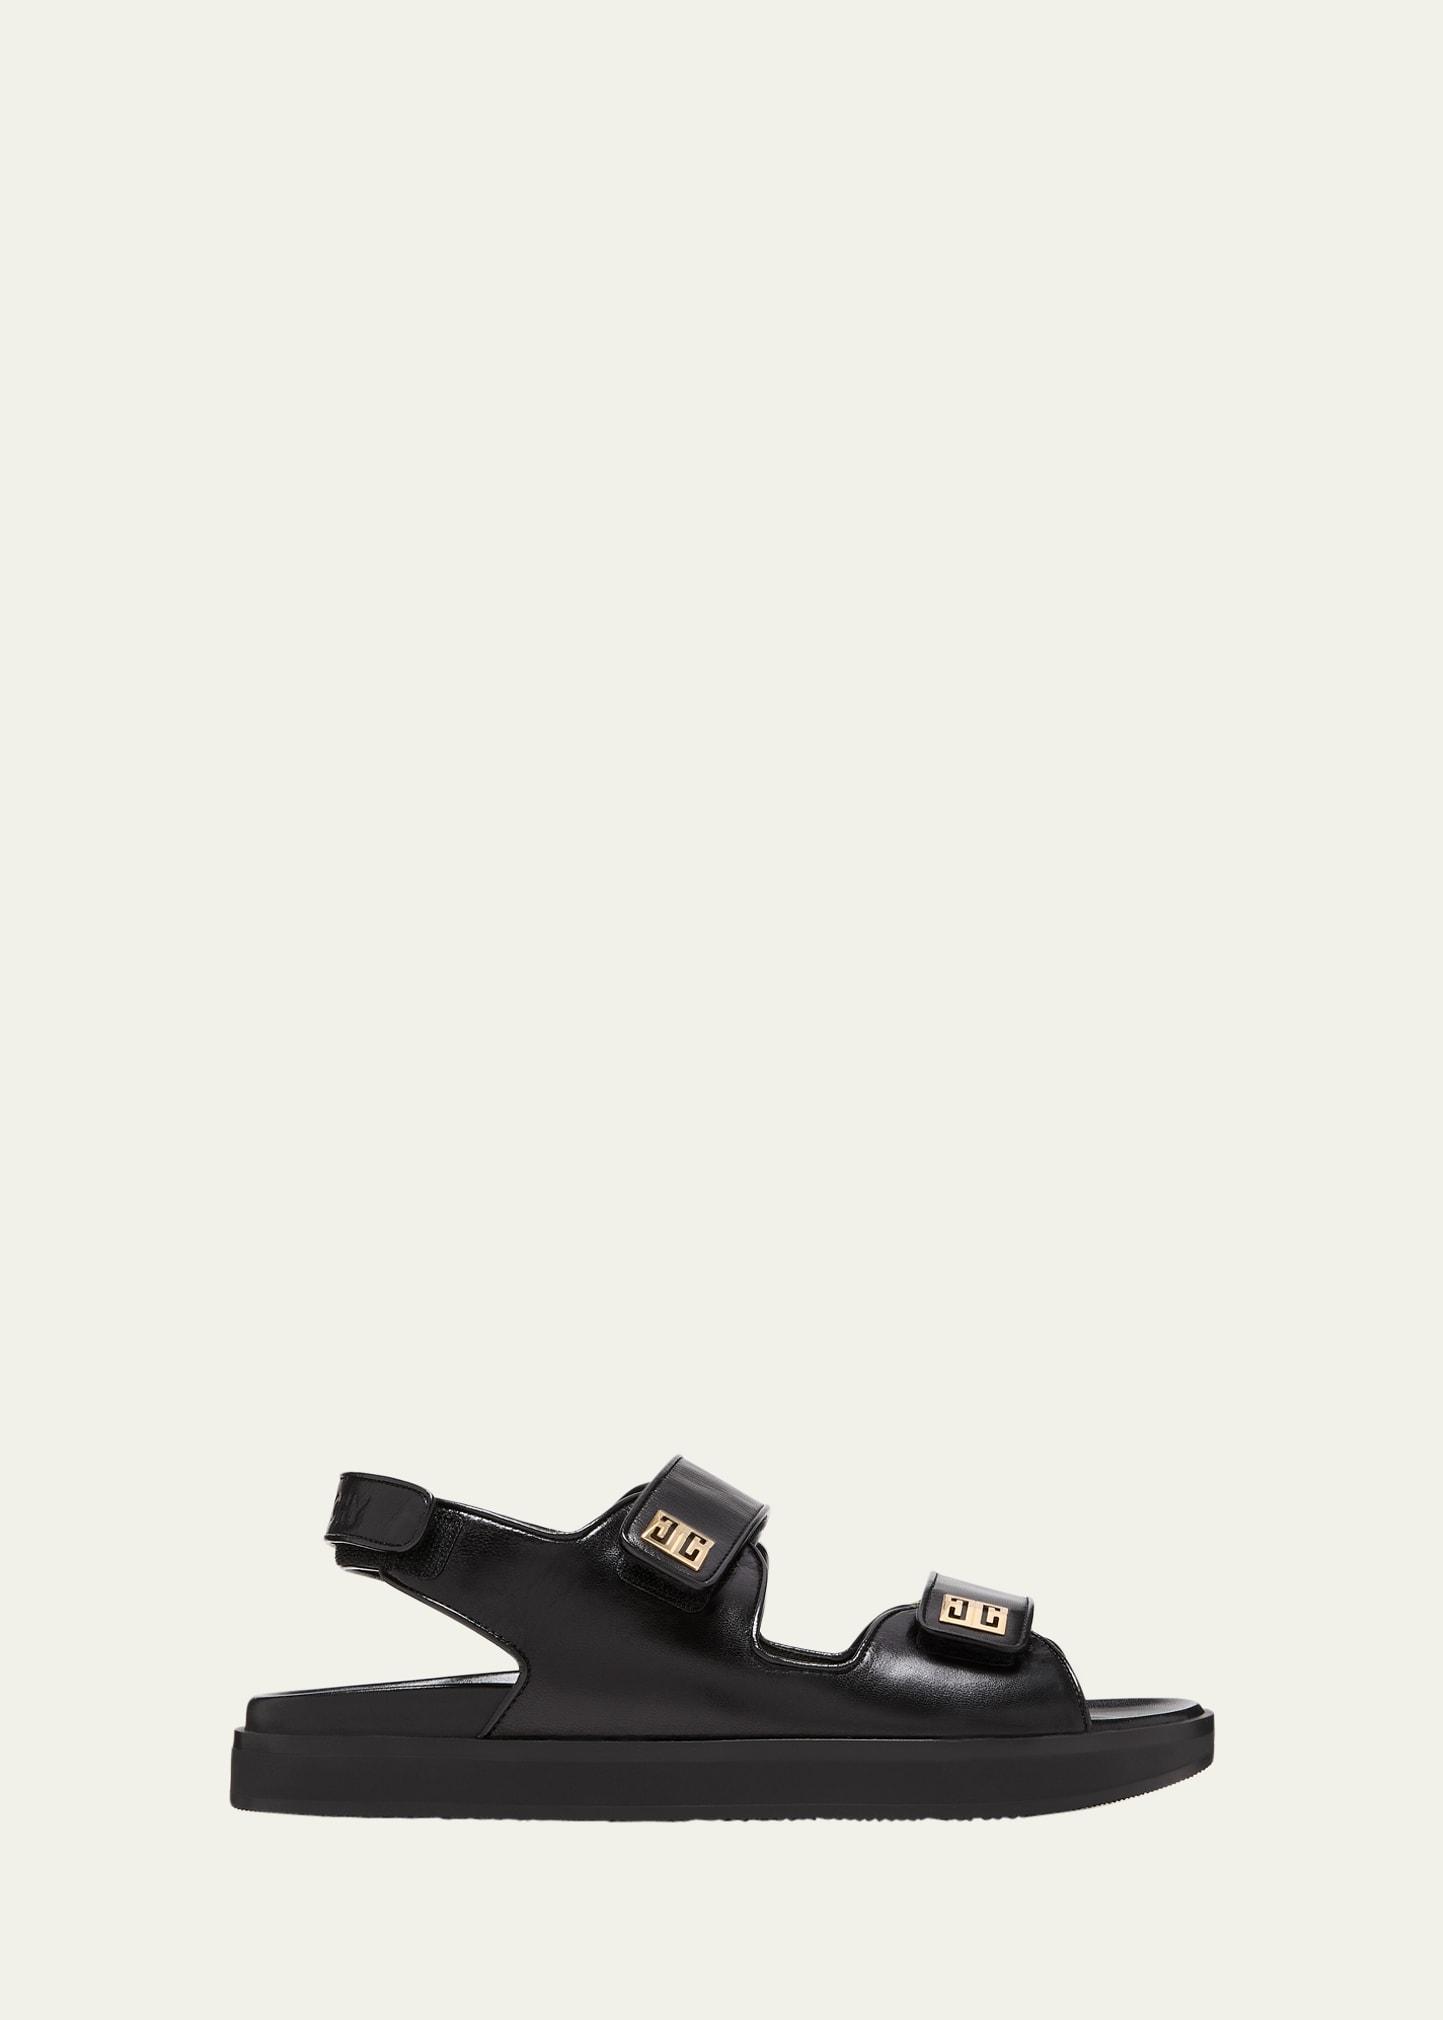 Givenchy 4G Adjustable Slingback Sandal Product Image